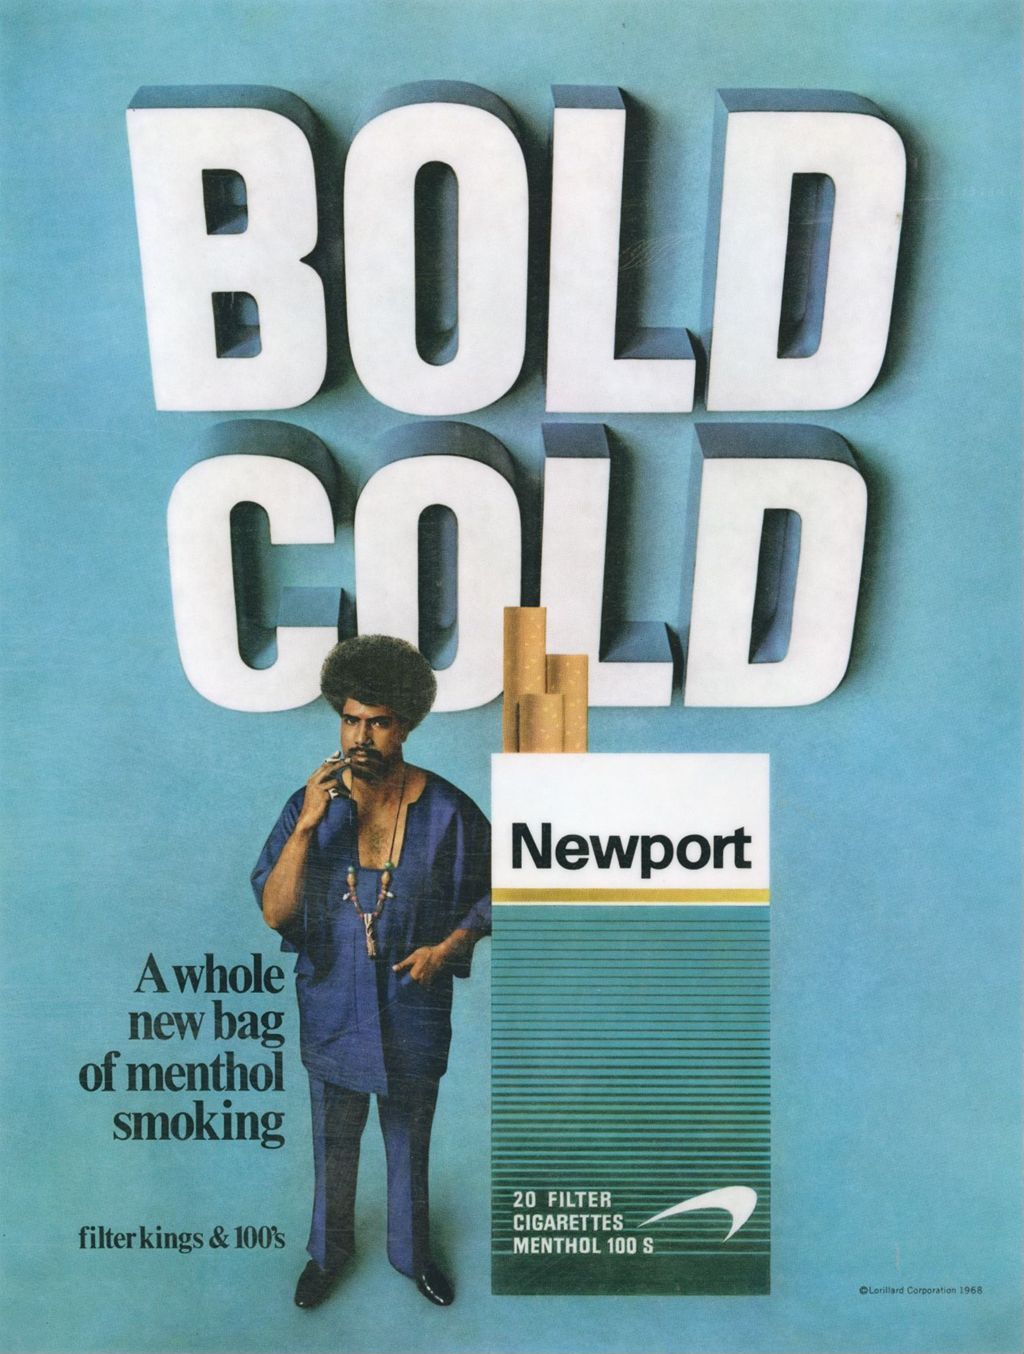 Miniature of Bold Cold, cigarette advertisement